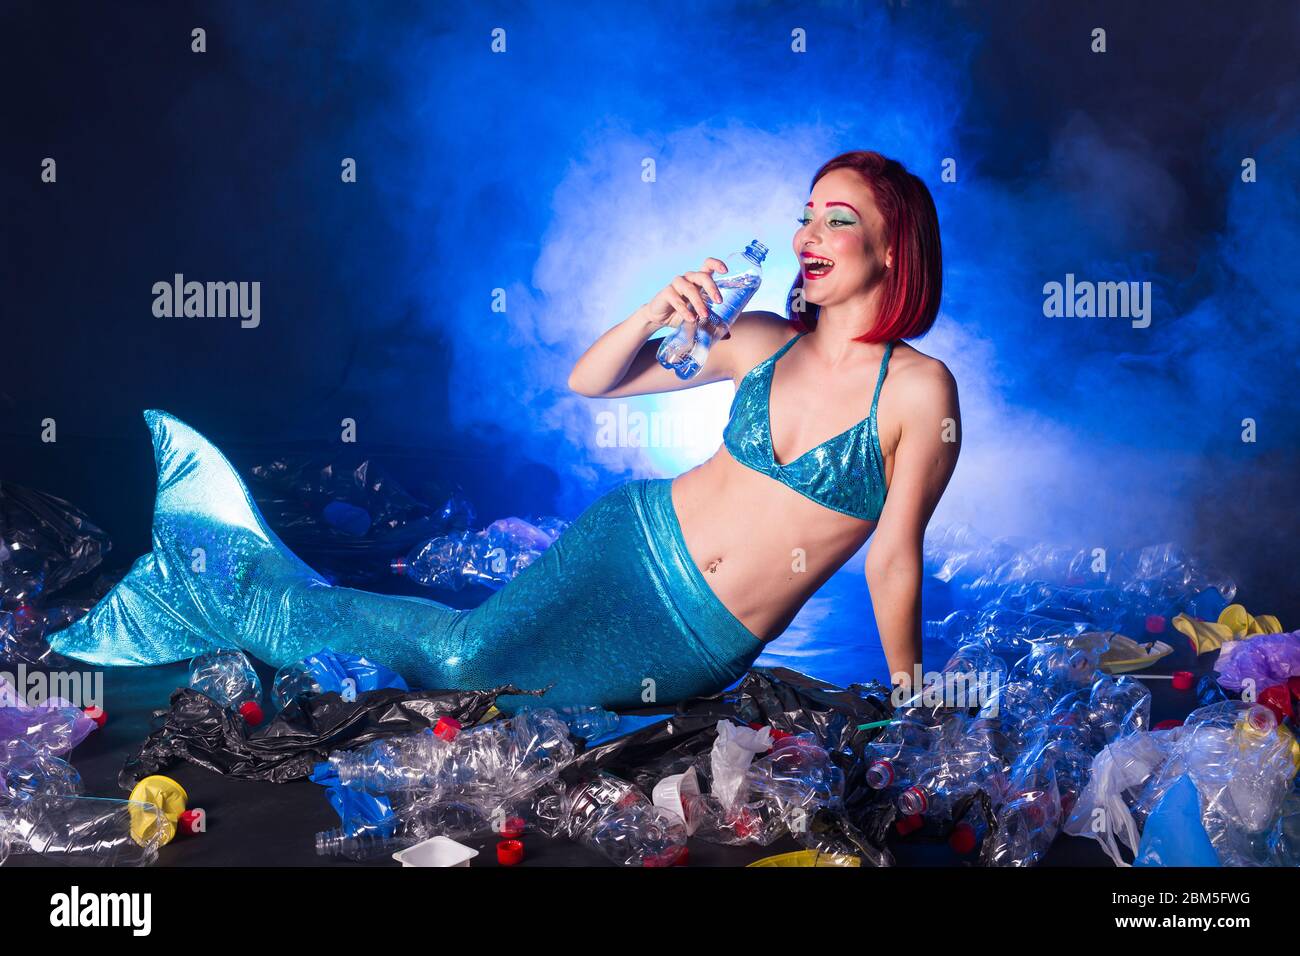 Ocean pollution, rubbish in the water. Stupid fairytale mermaid in